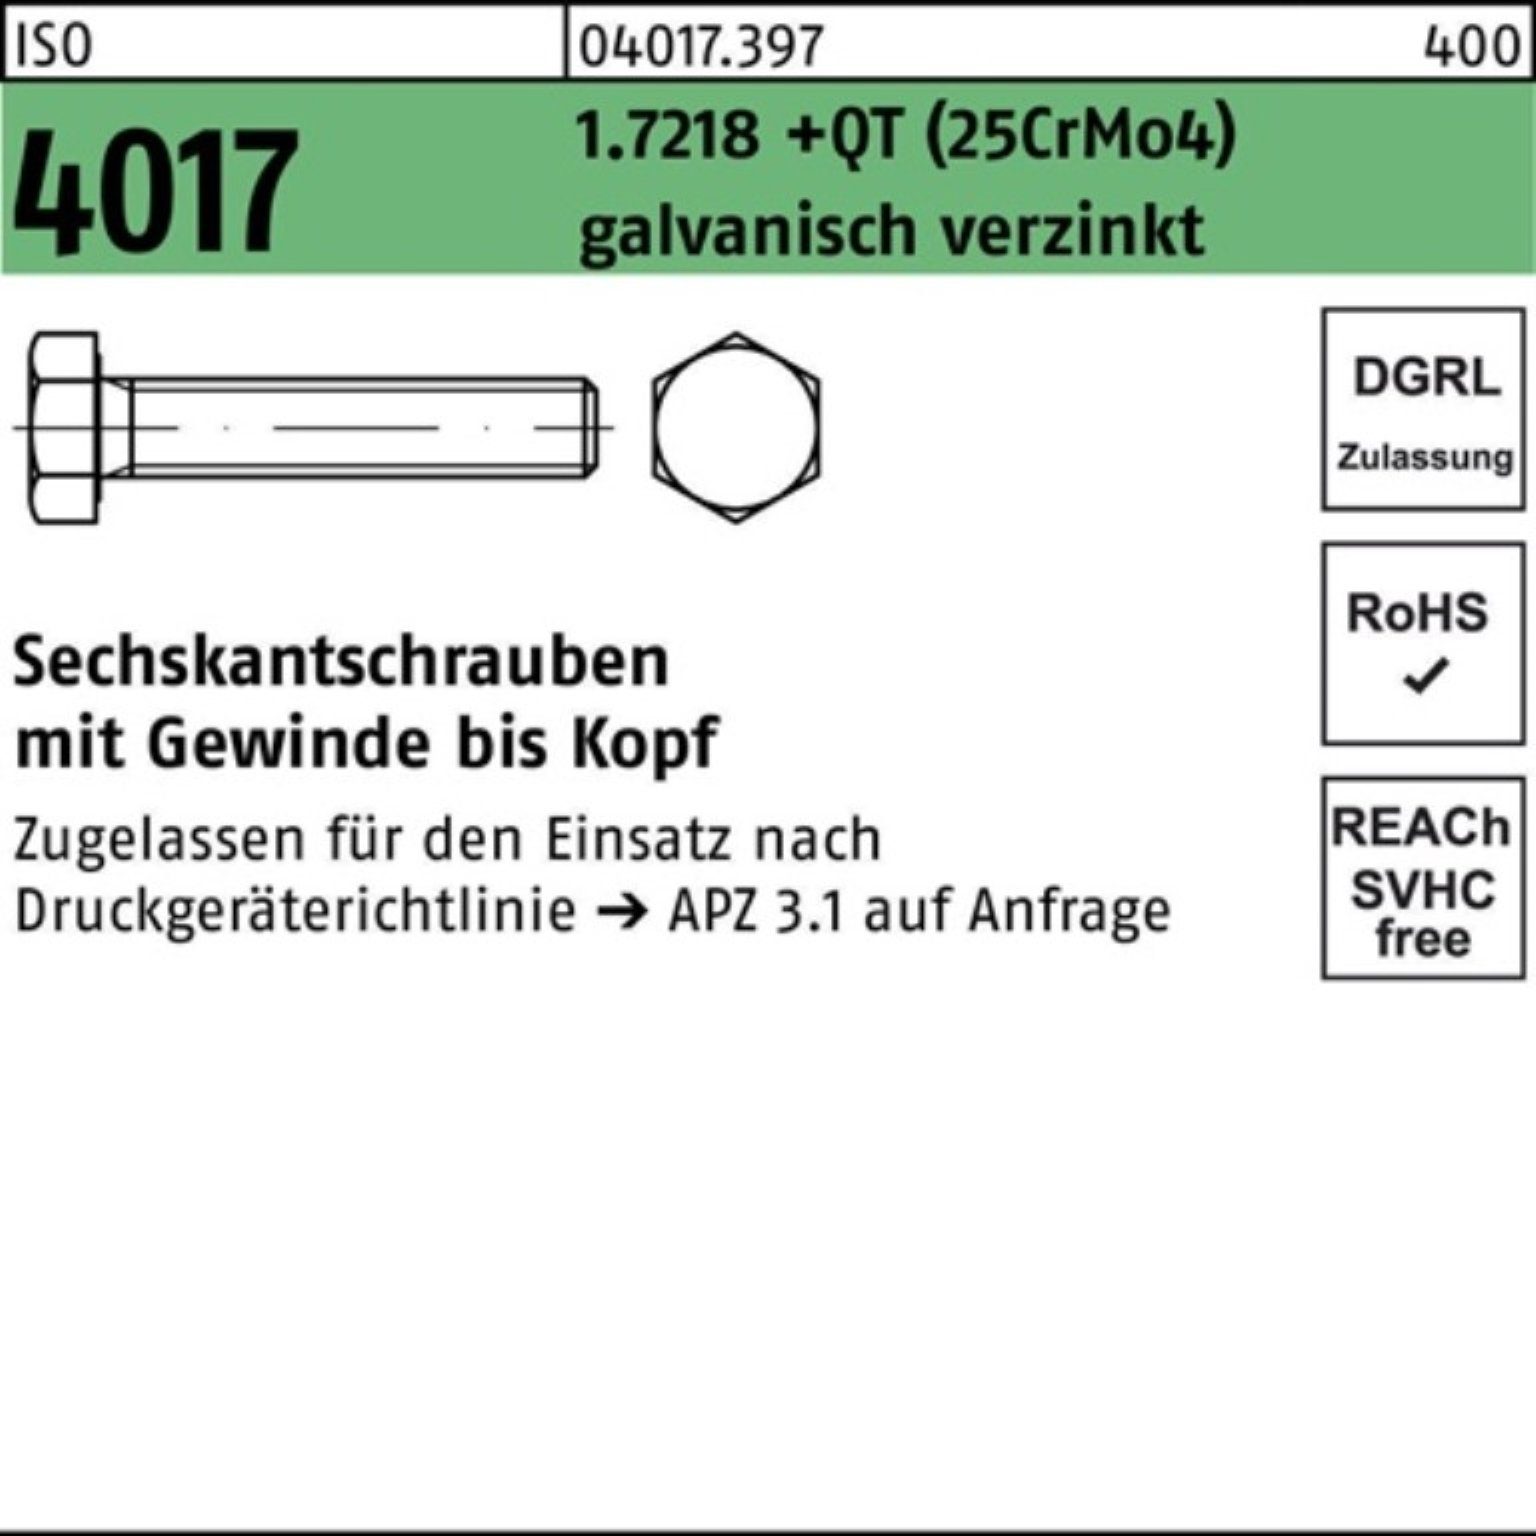 100er VG ISO Sechskantschraube Bufab Pack (25CrMo4) 4017 Sechskantschraube M20x150 +QT 1.7218